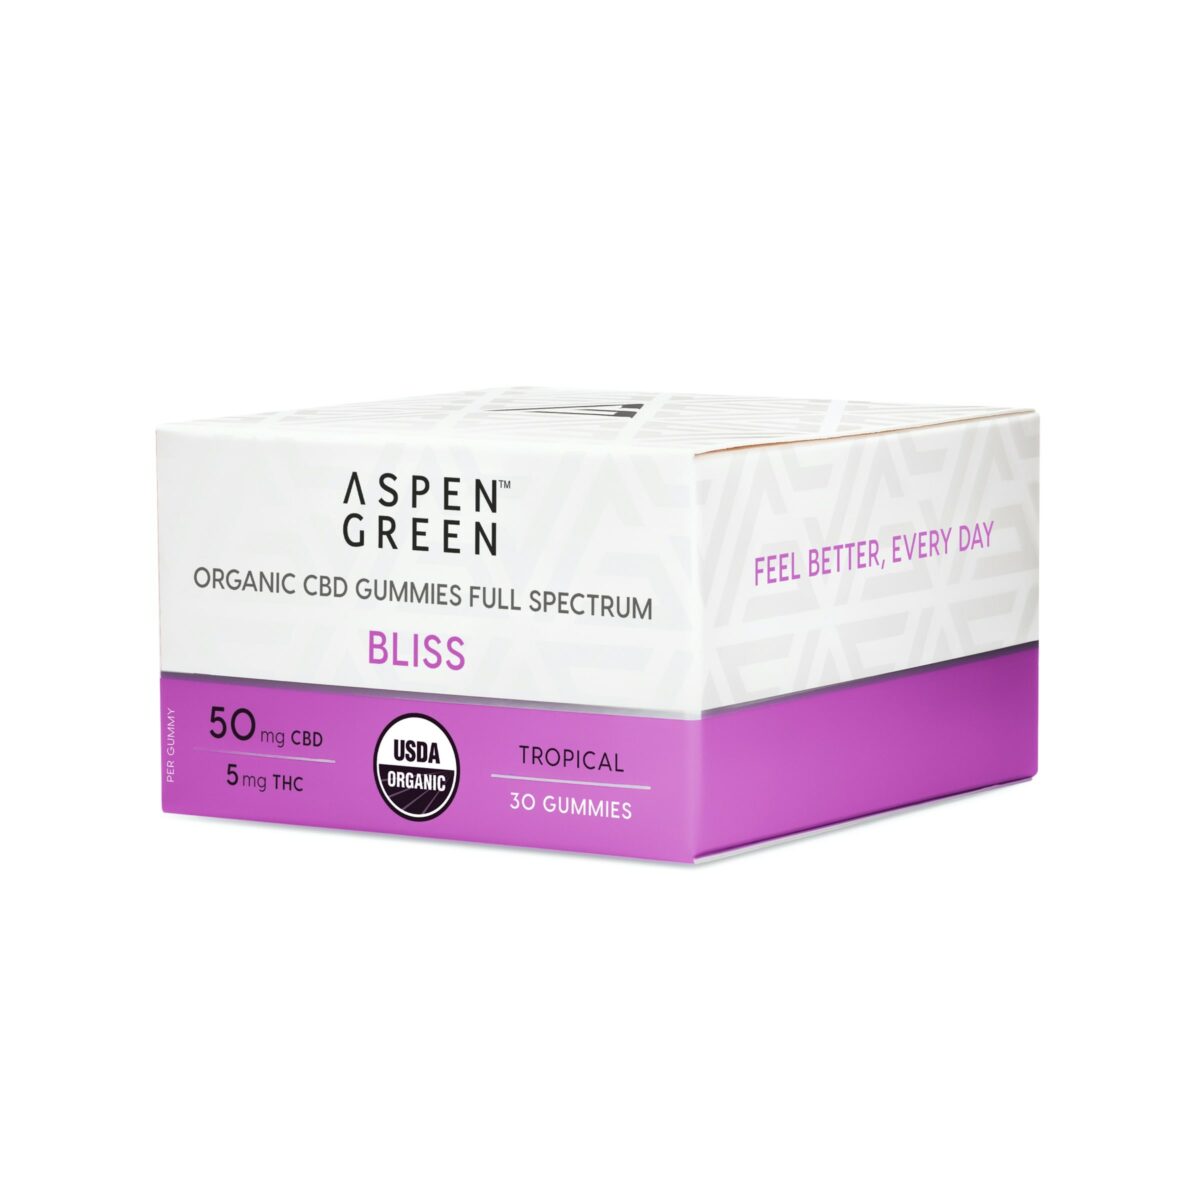 Aspen Green USDA Certified Organic CBD Gummies, Bliss (50mg CBD), Tropical Flavor, 30 Gummies